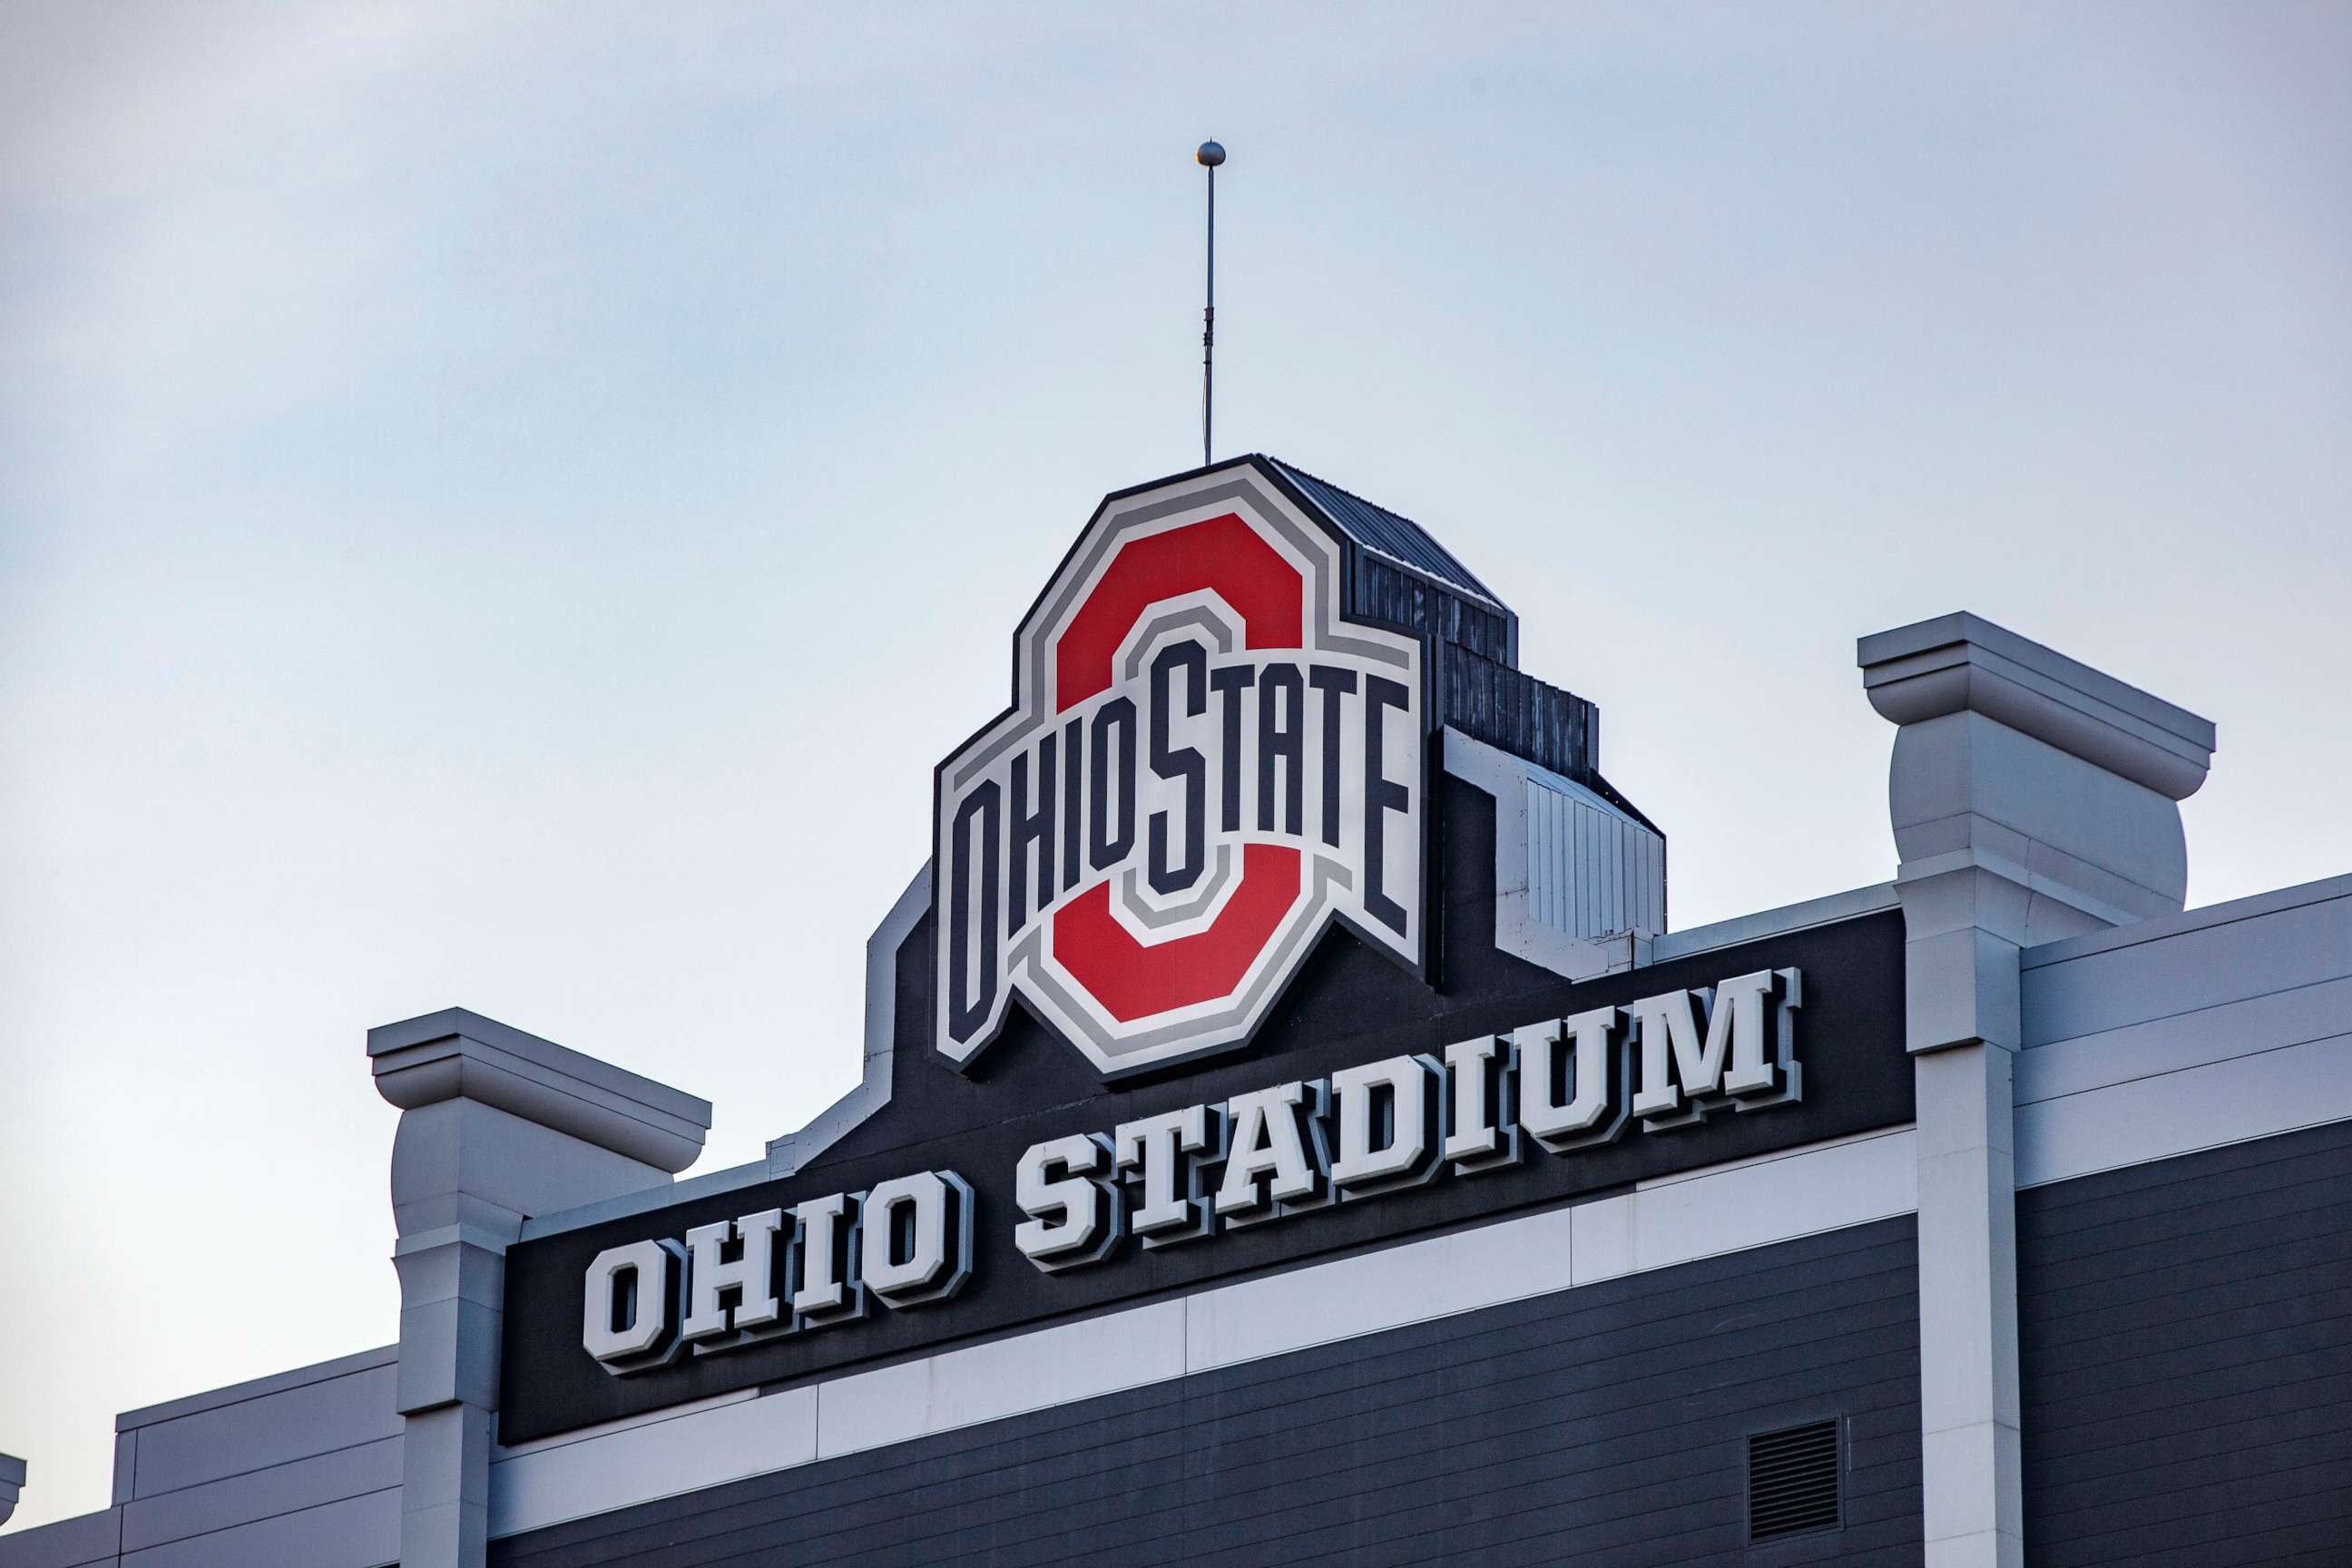 PHOTO: The Ohio State University logo at the top of the Ohio Stadium.